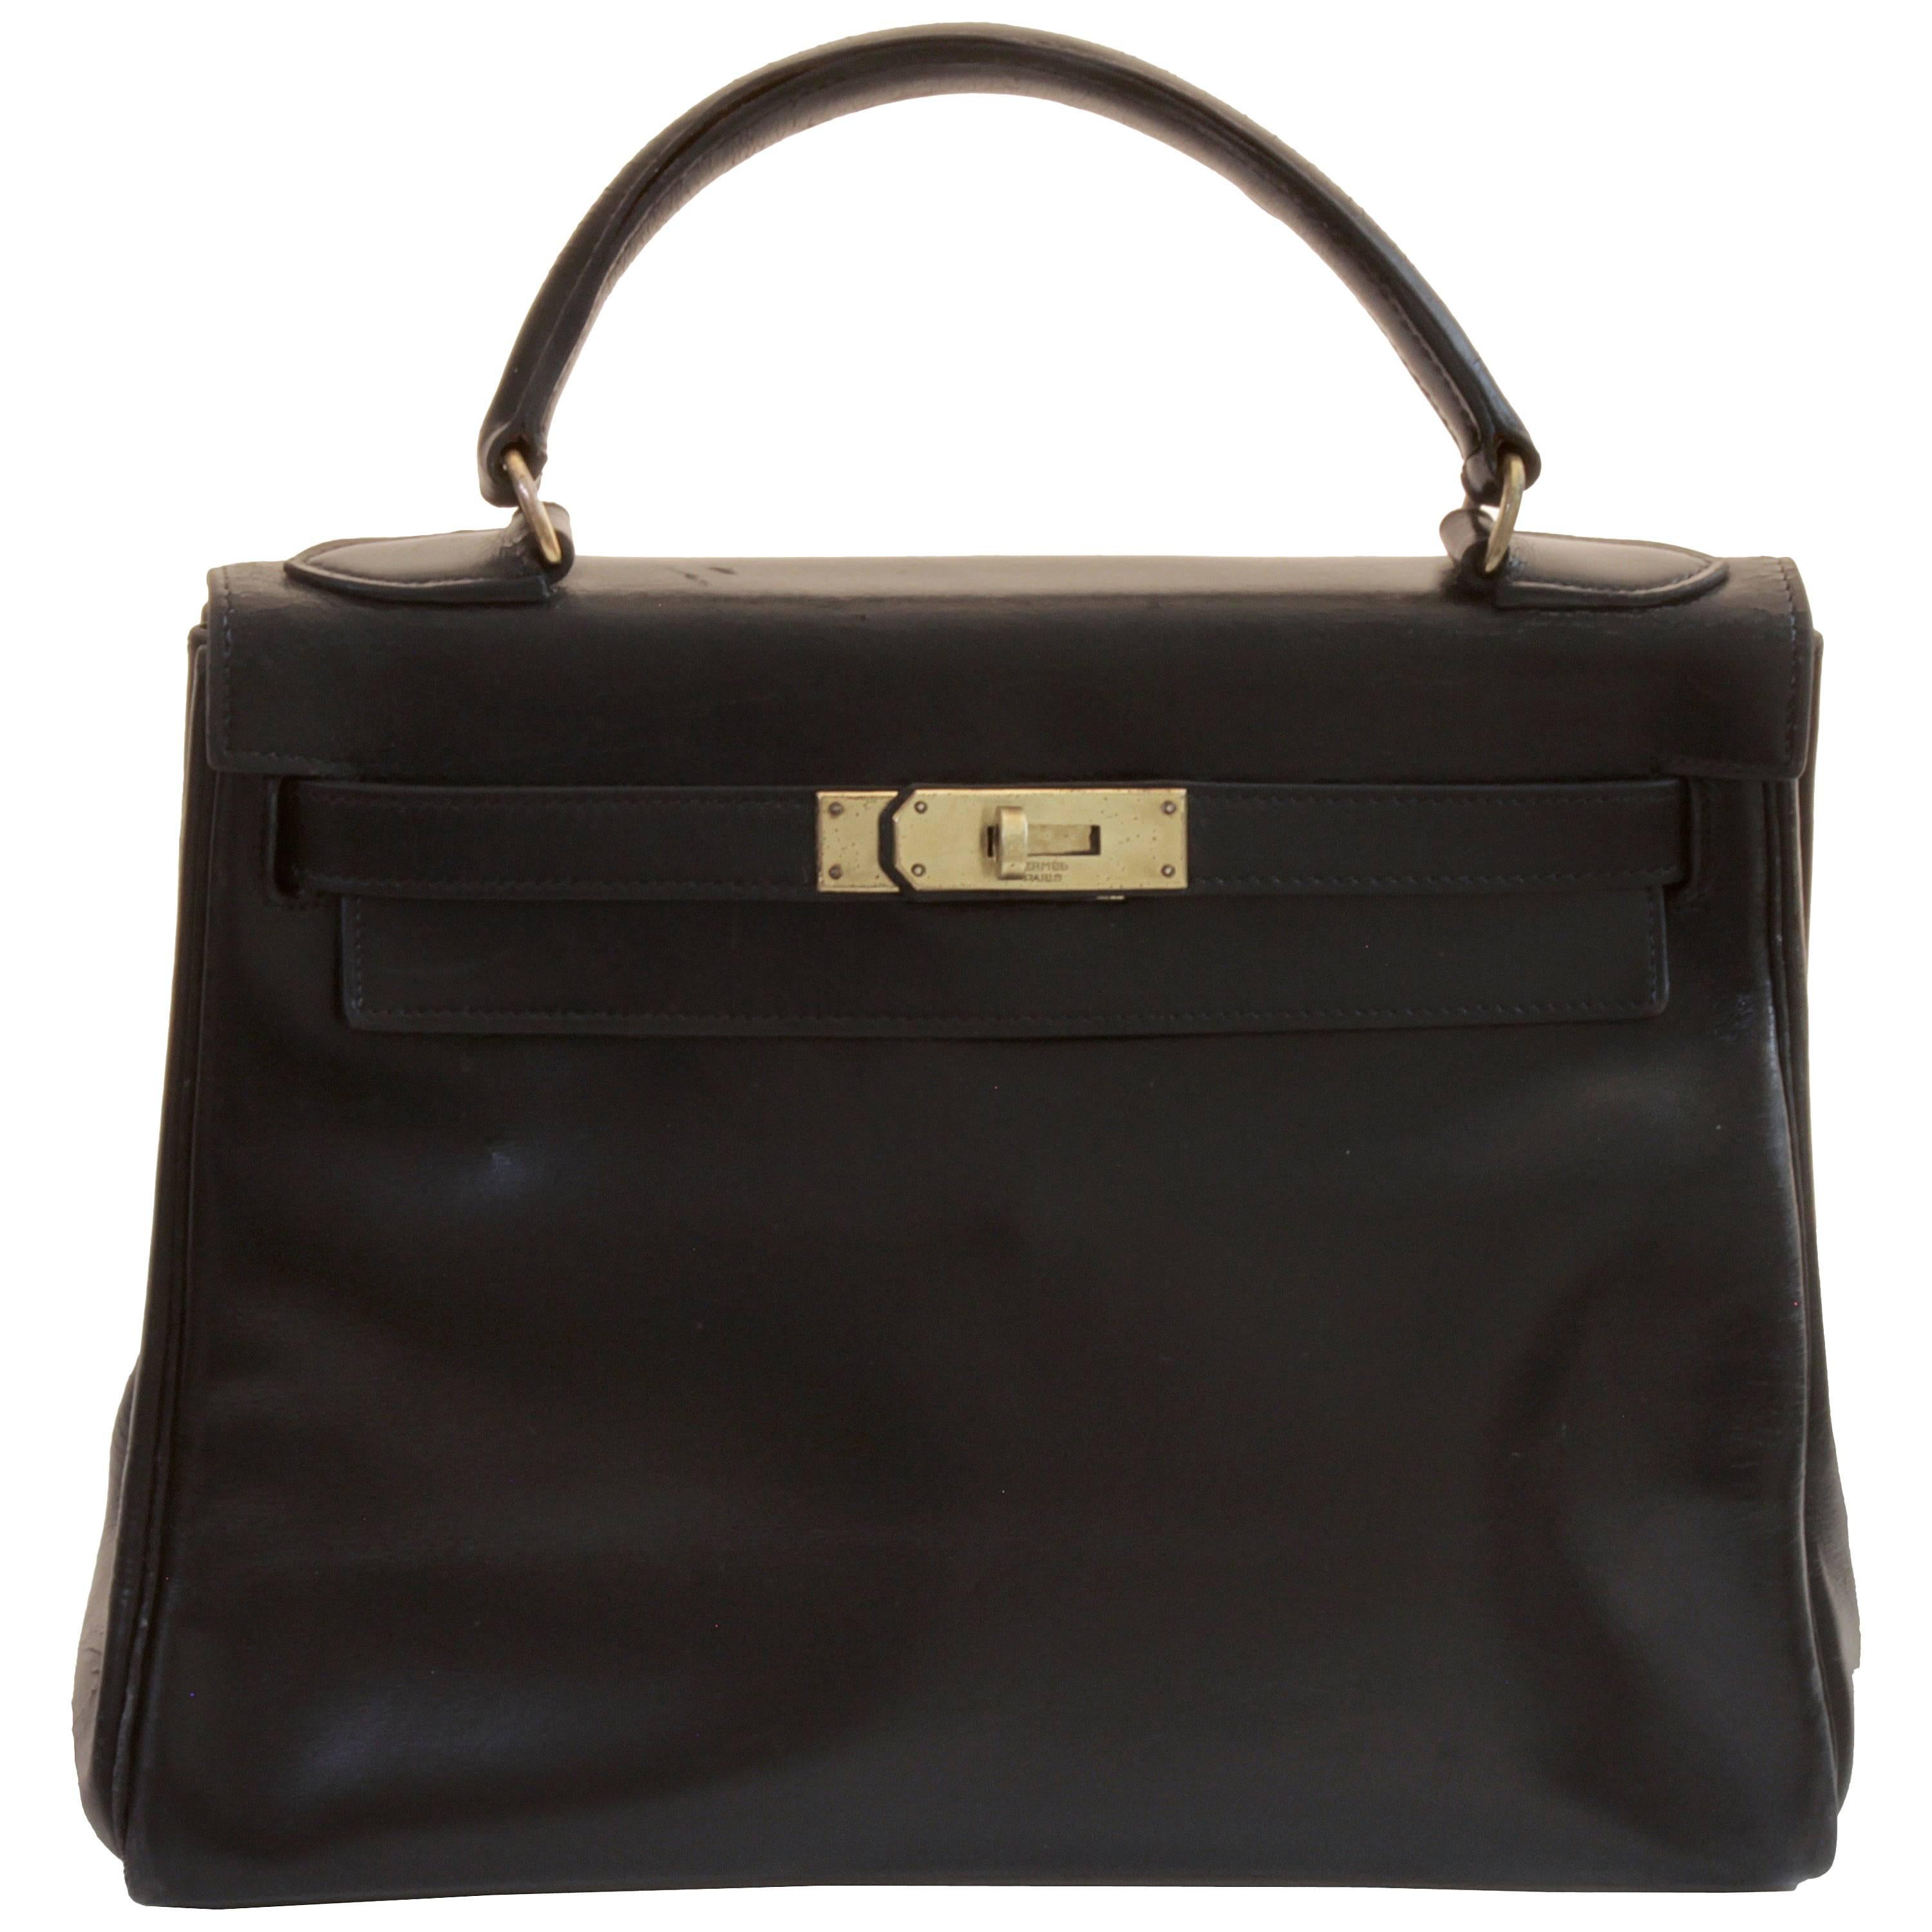 Hermes Kelly Bag 28cm Sac a Depeches Black Box Leather 1948 Vintage